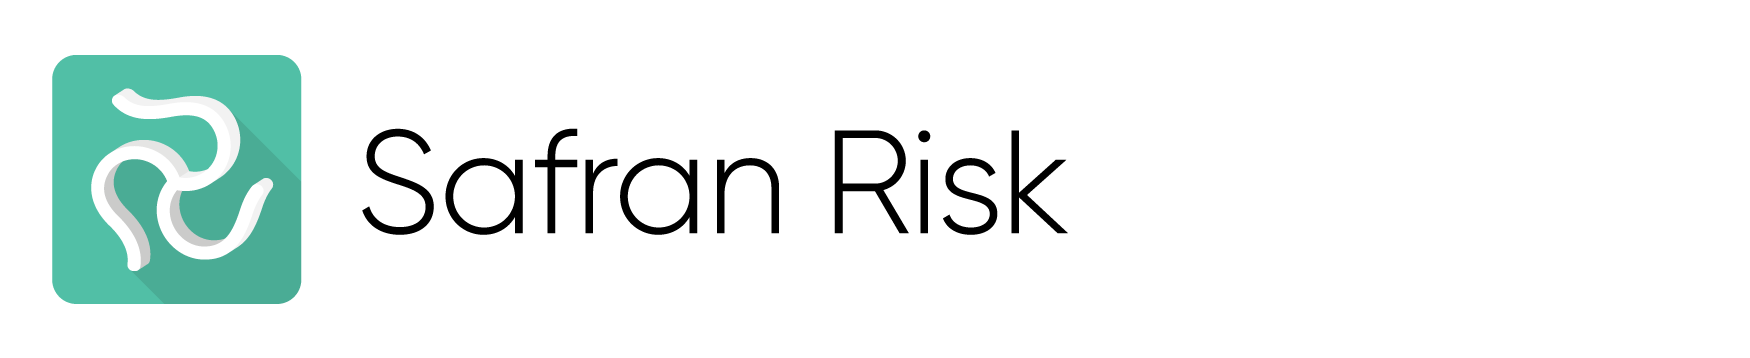 safran risk logo